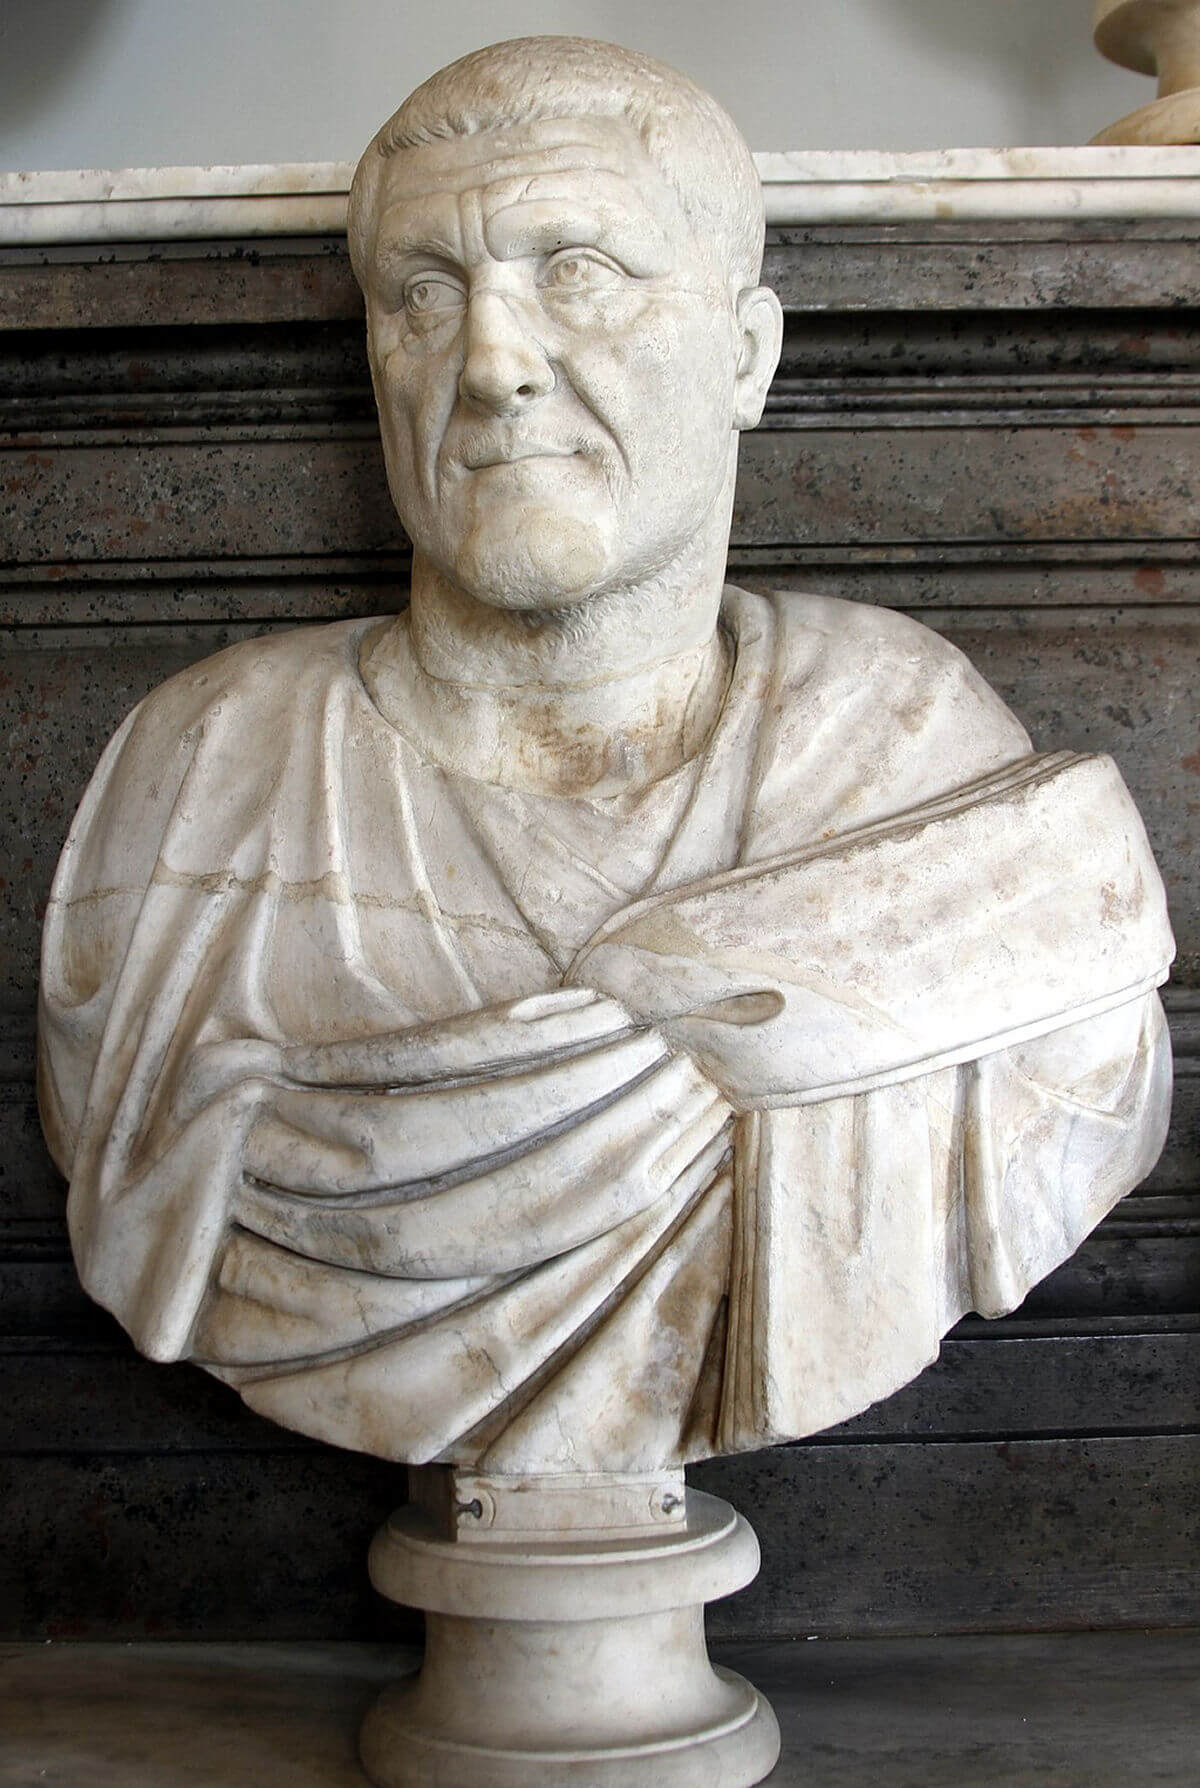 A bust of the Roman emperor Maximinus Thrax